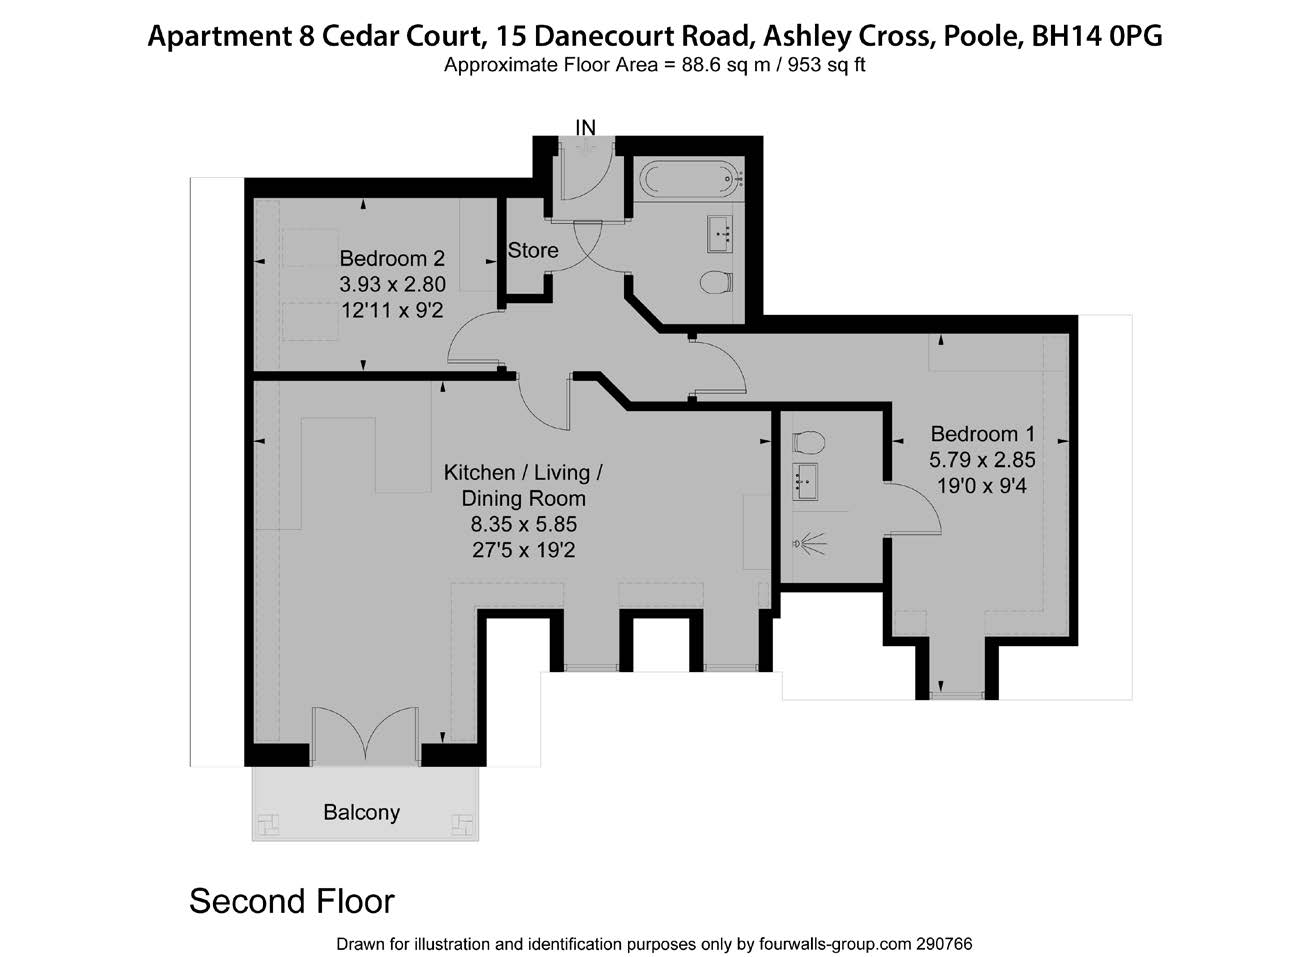 Apartment 8 Cedar Court Floor plan